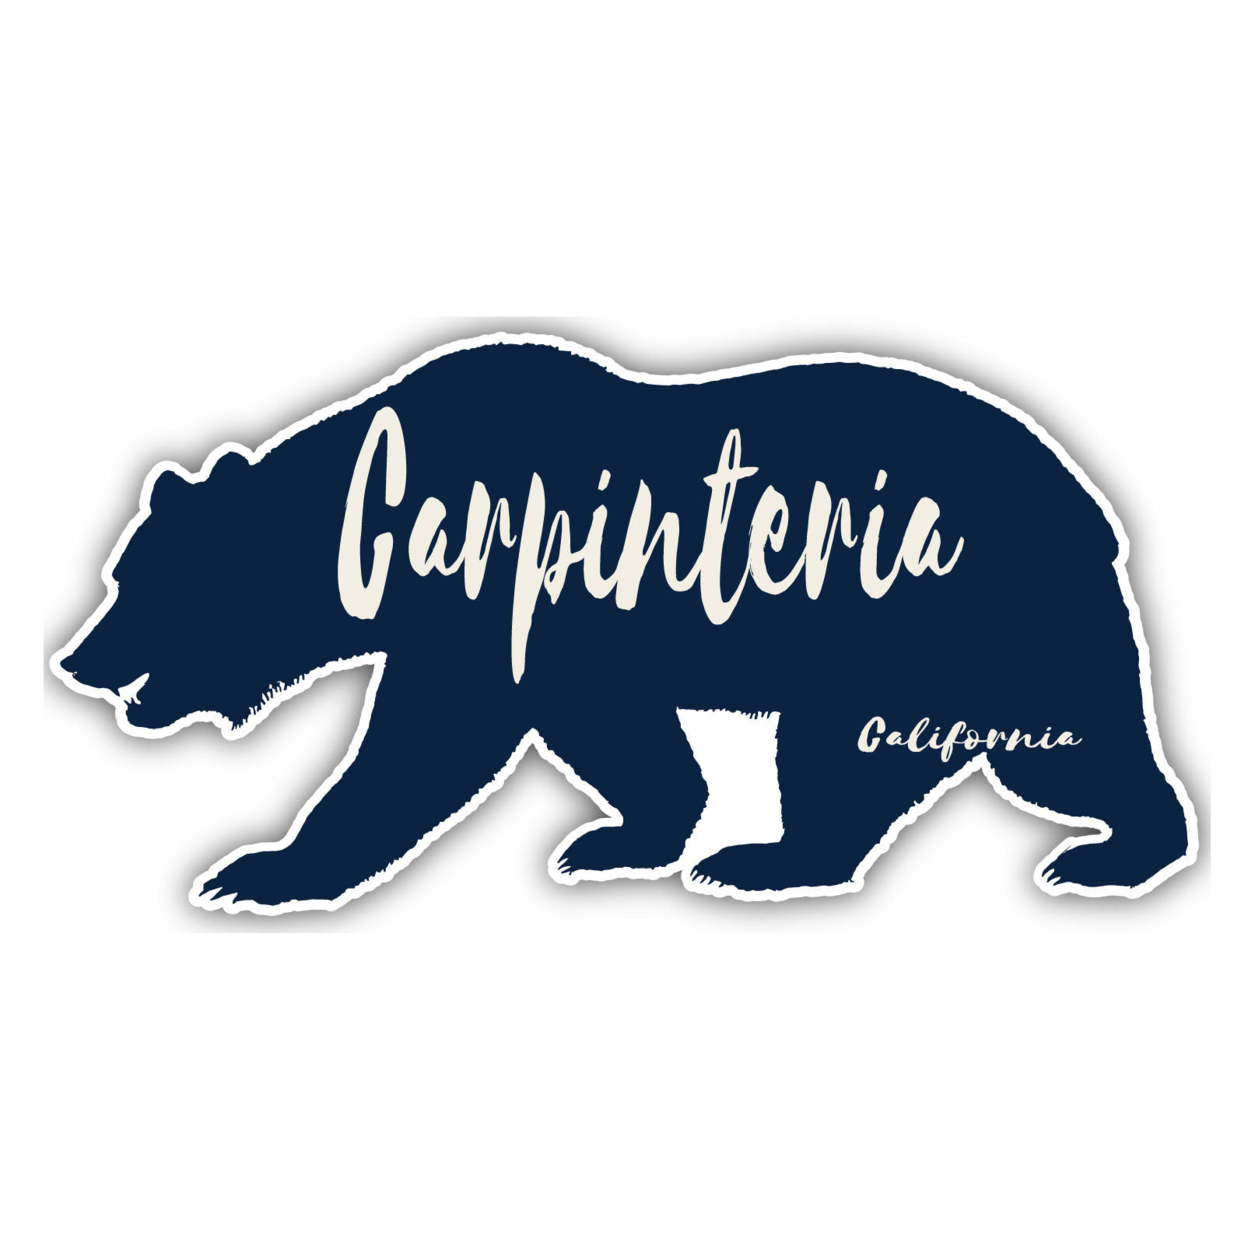 Carpinteria California Souvenir Decorative Stickers (Choose Theme And Size) - 4-Pack, 4-Inch, Tent